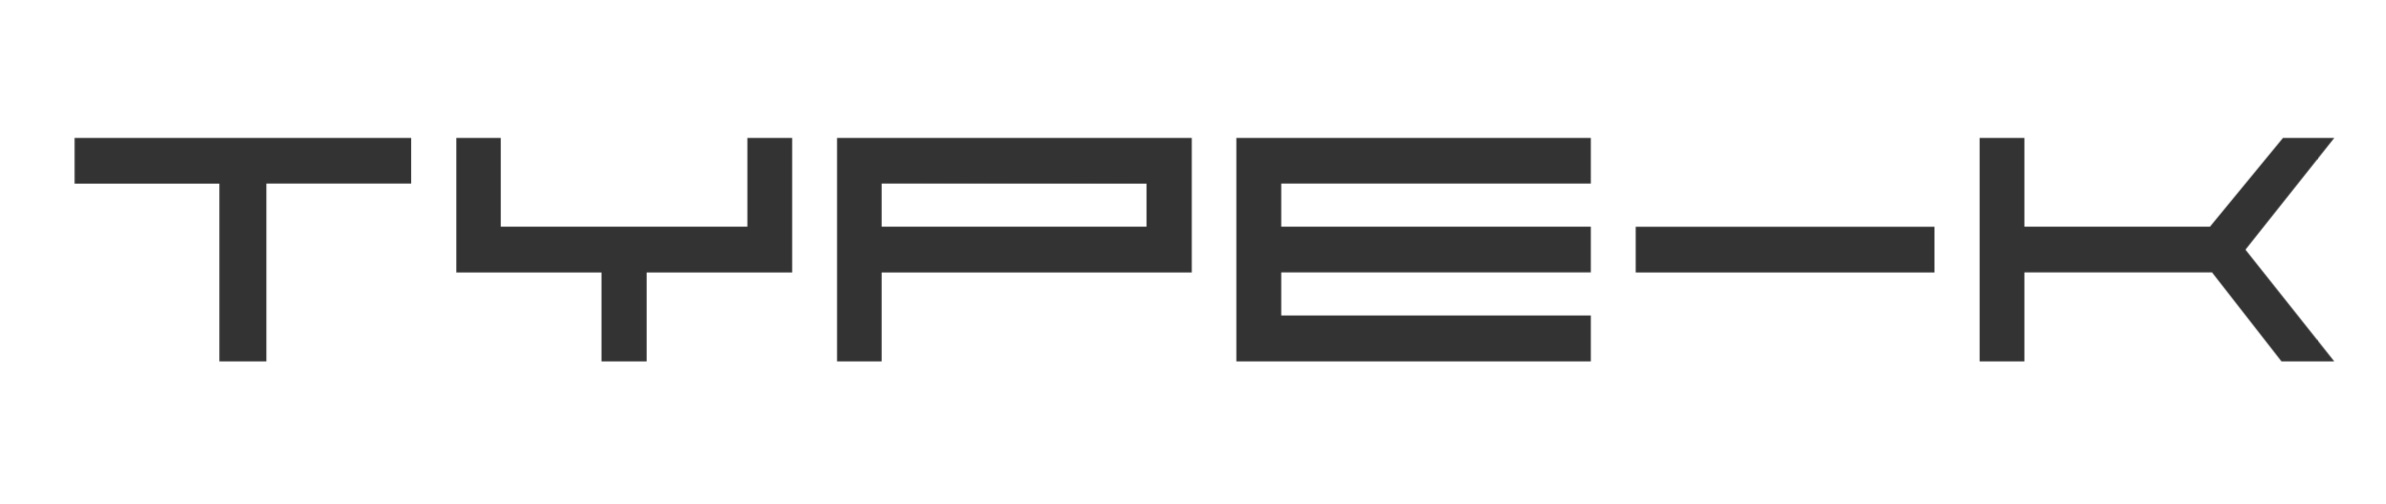 logo type k mizutani